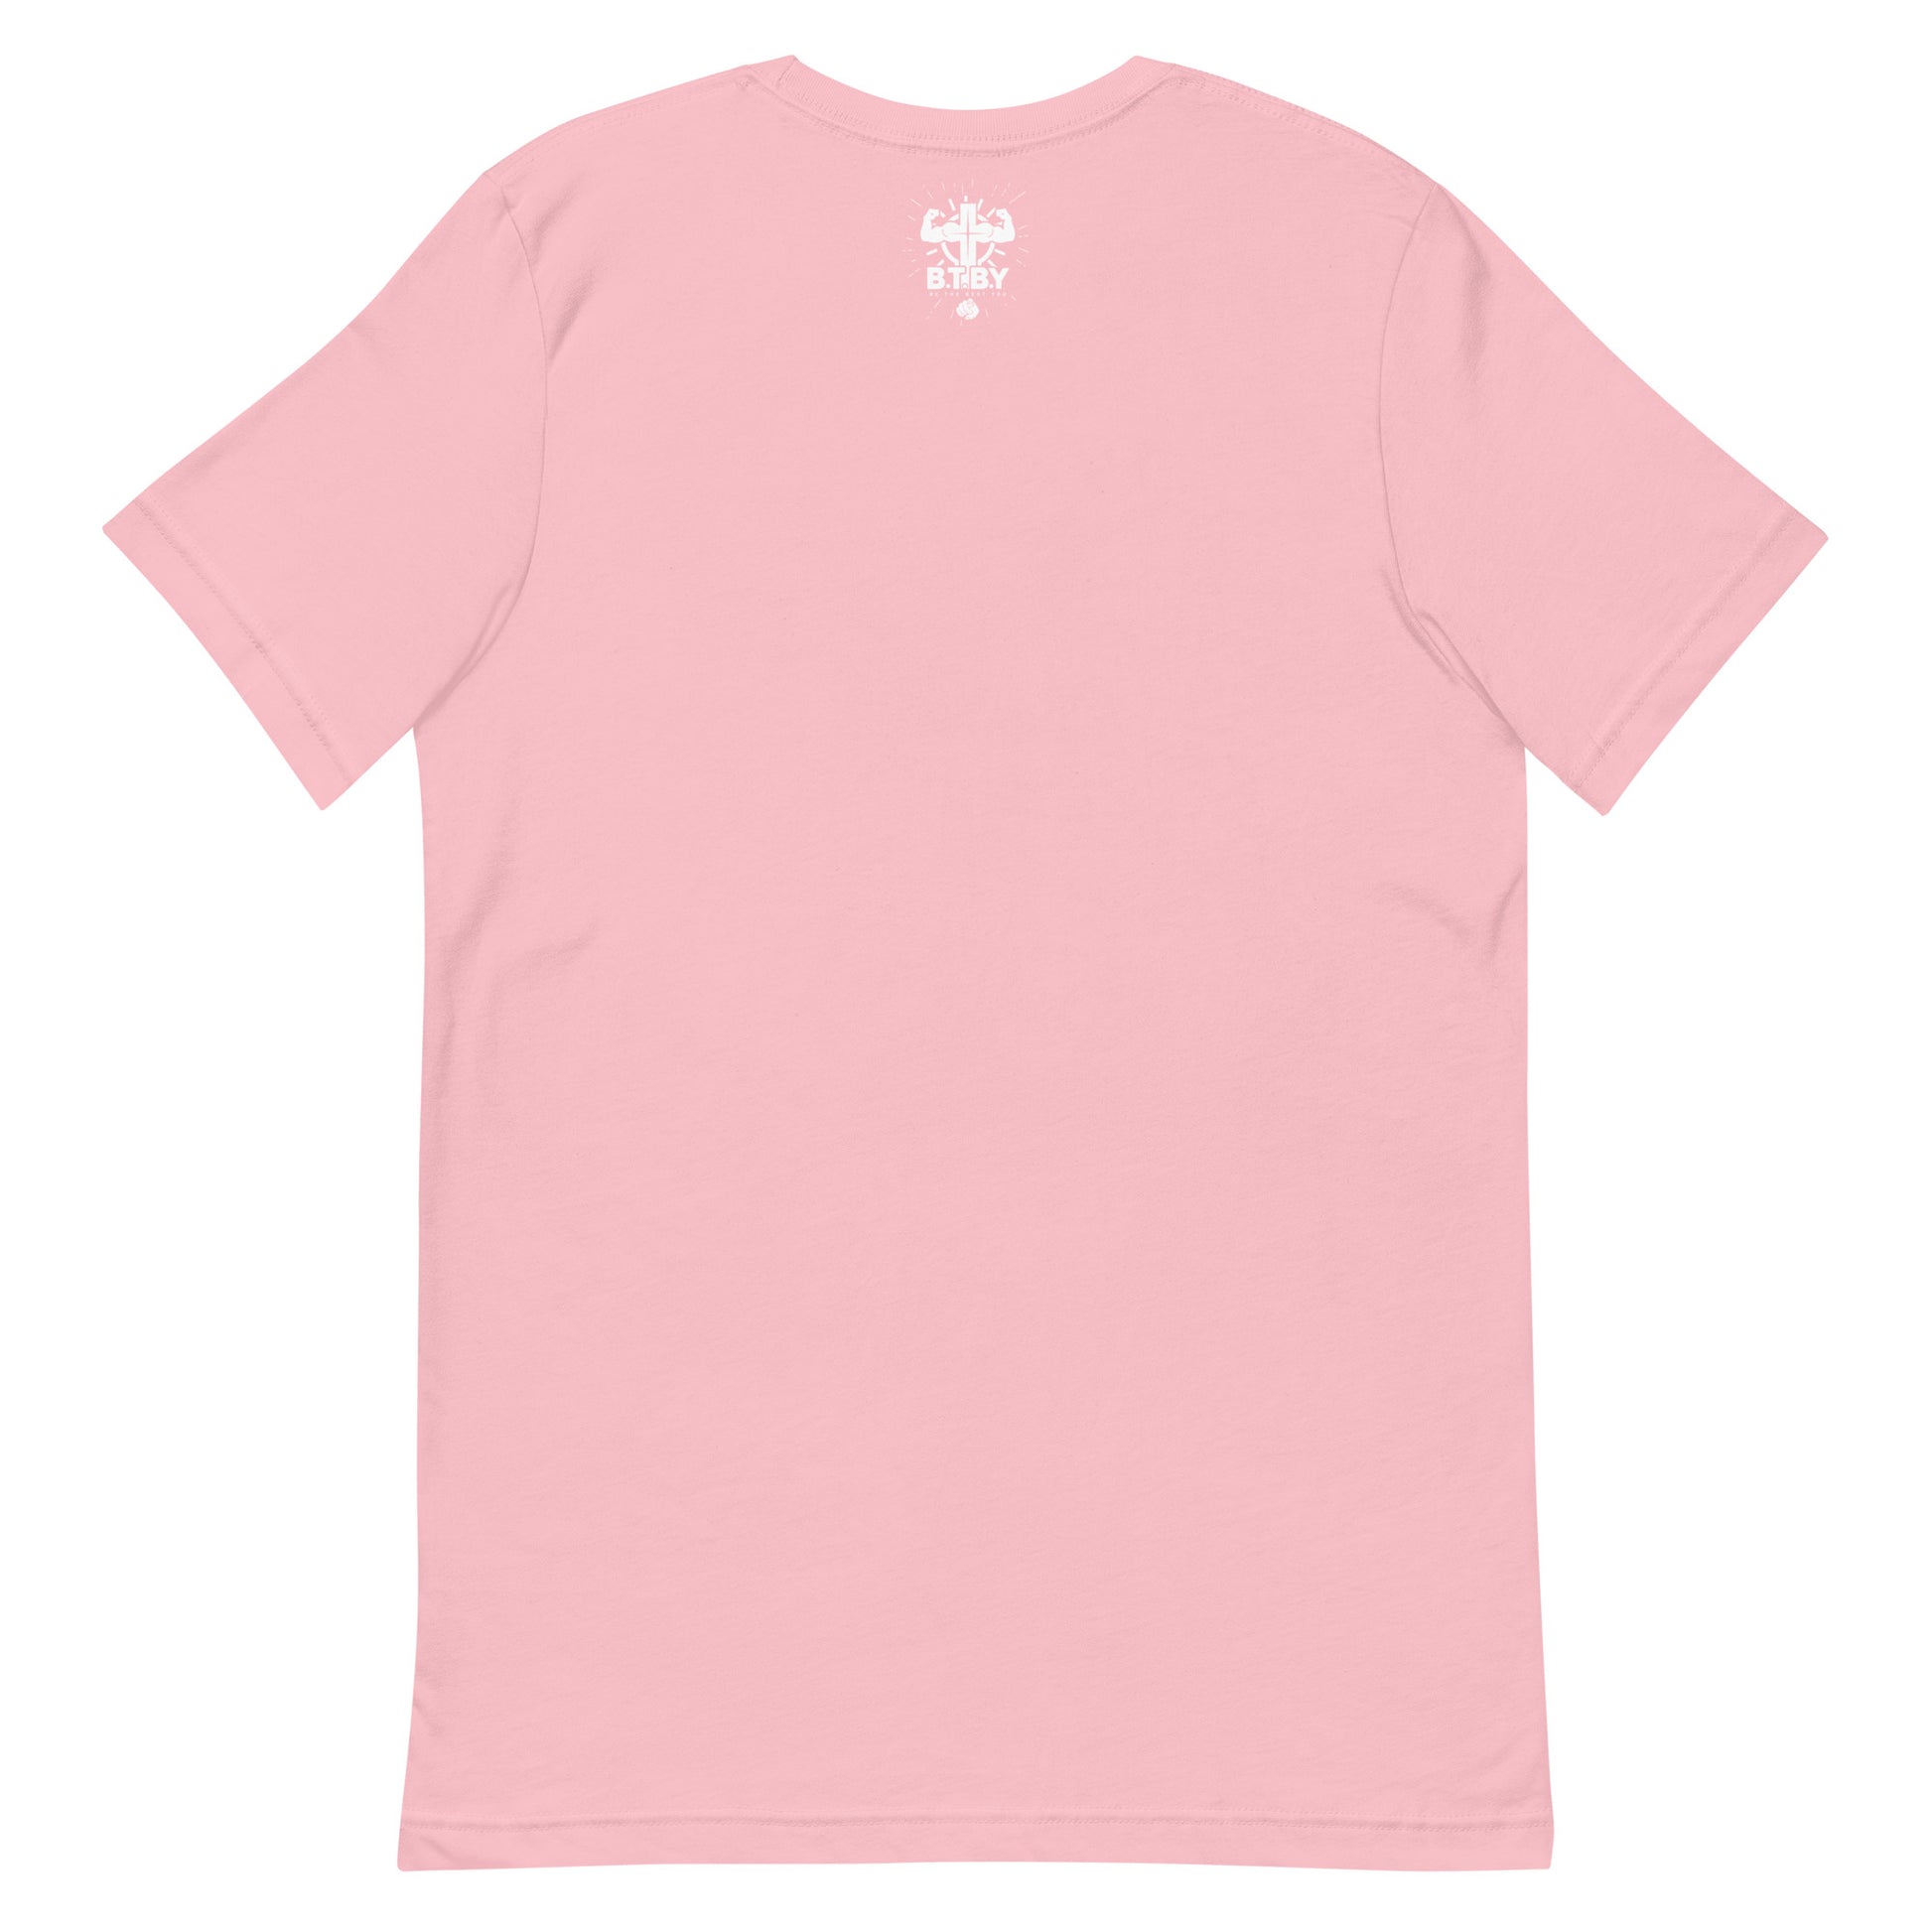 Short-Sleeve Unisex BTBY T-Shirt Customer Choice Colors - BTBYstore